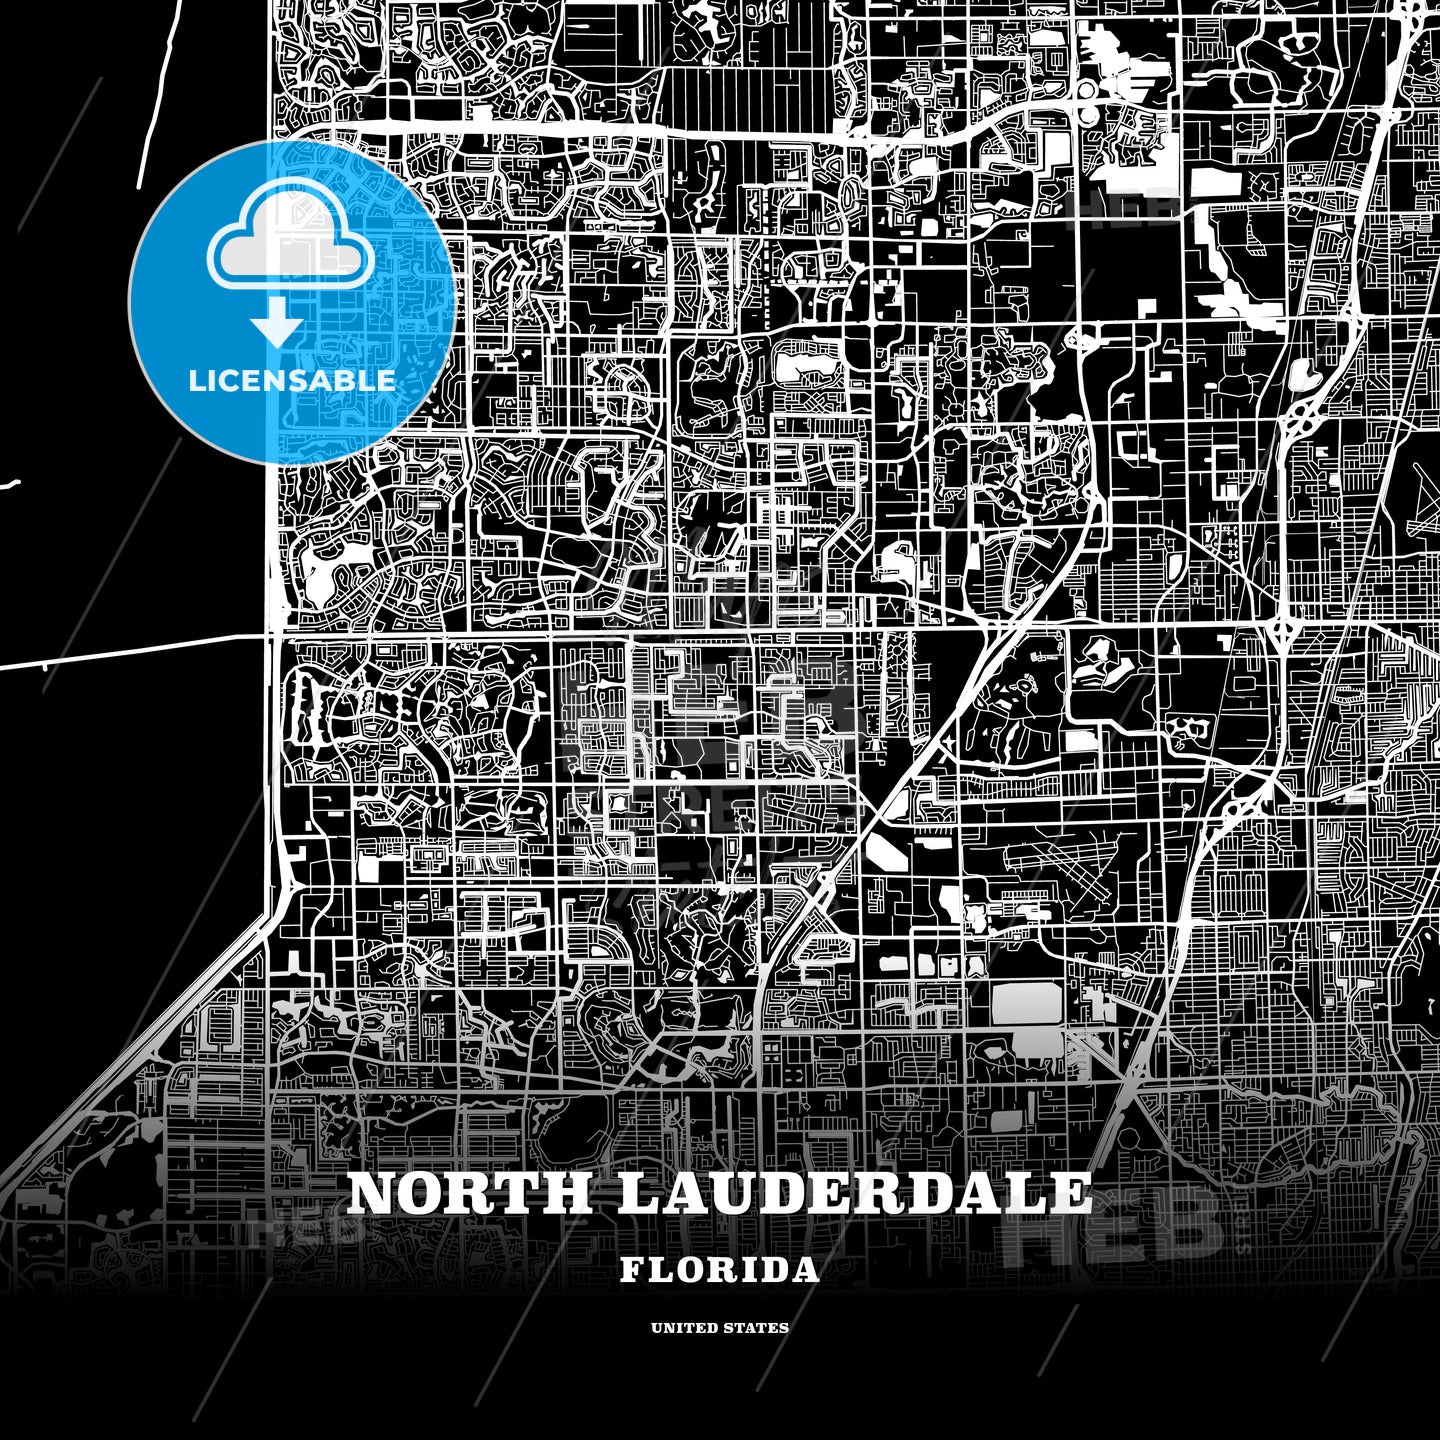 North Lauderdale, Florida, USA map